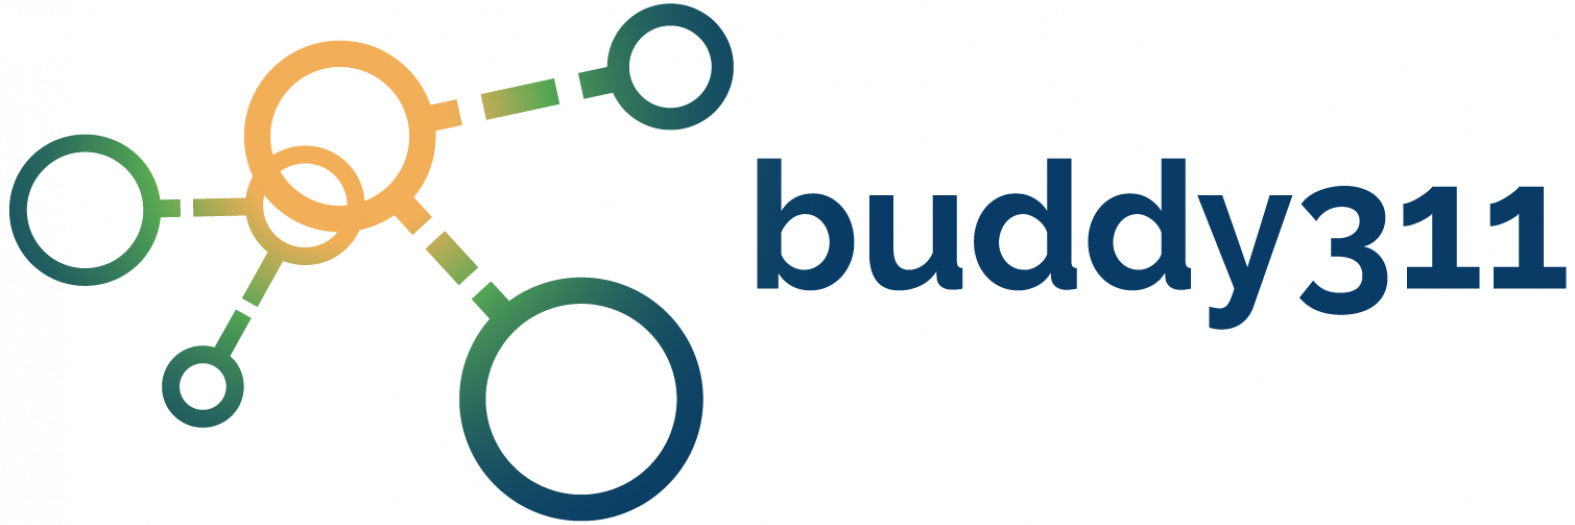 Buddy311 logo